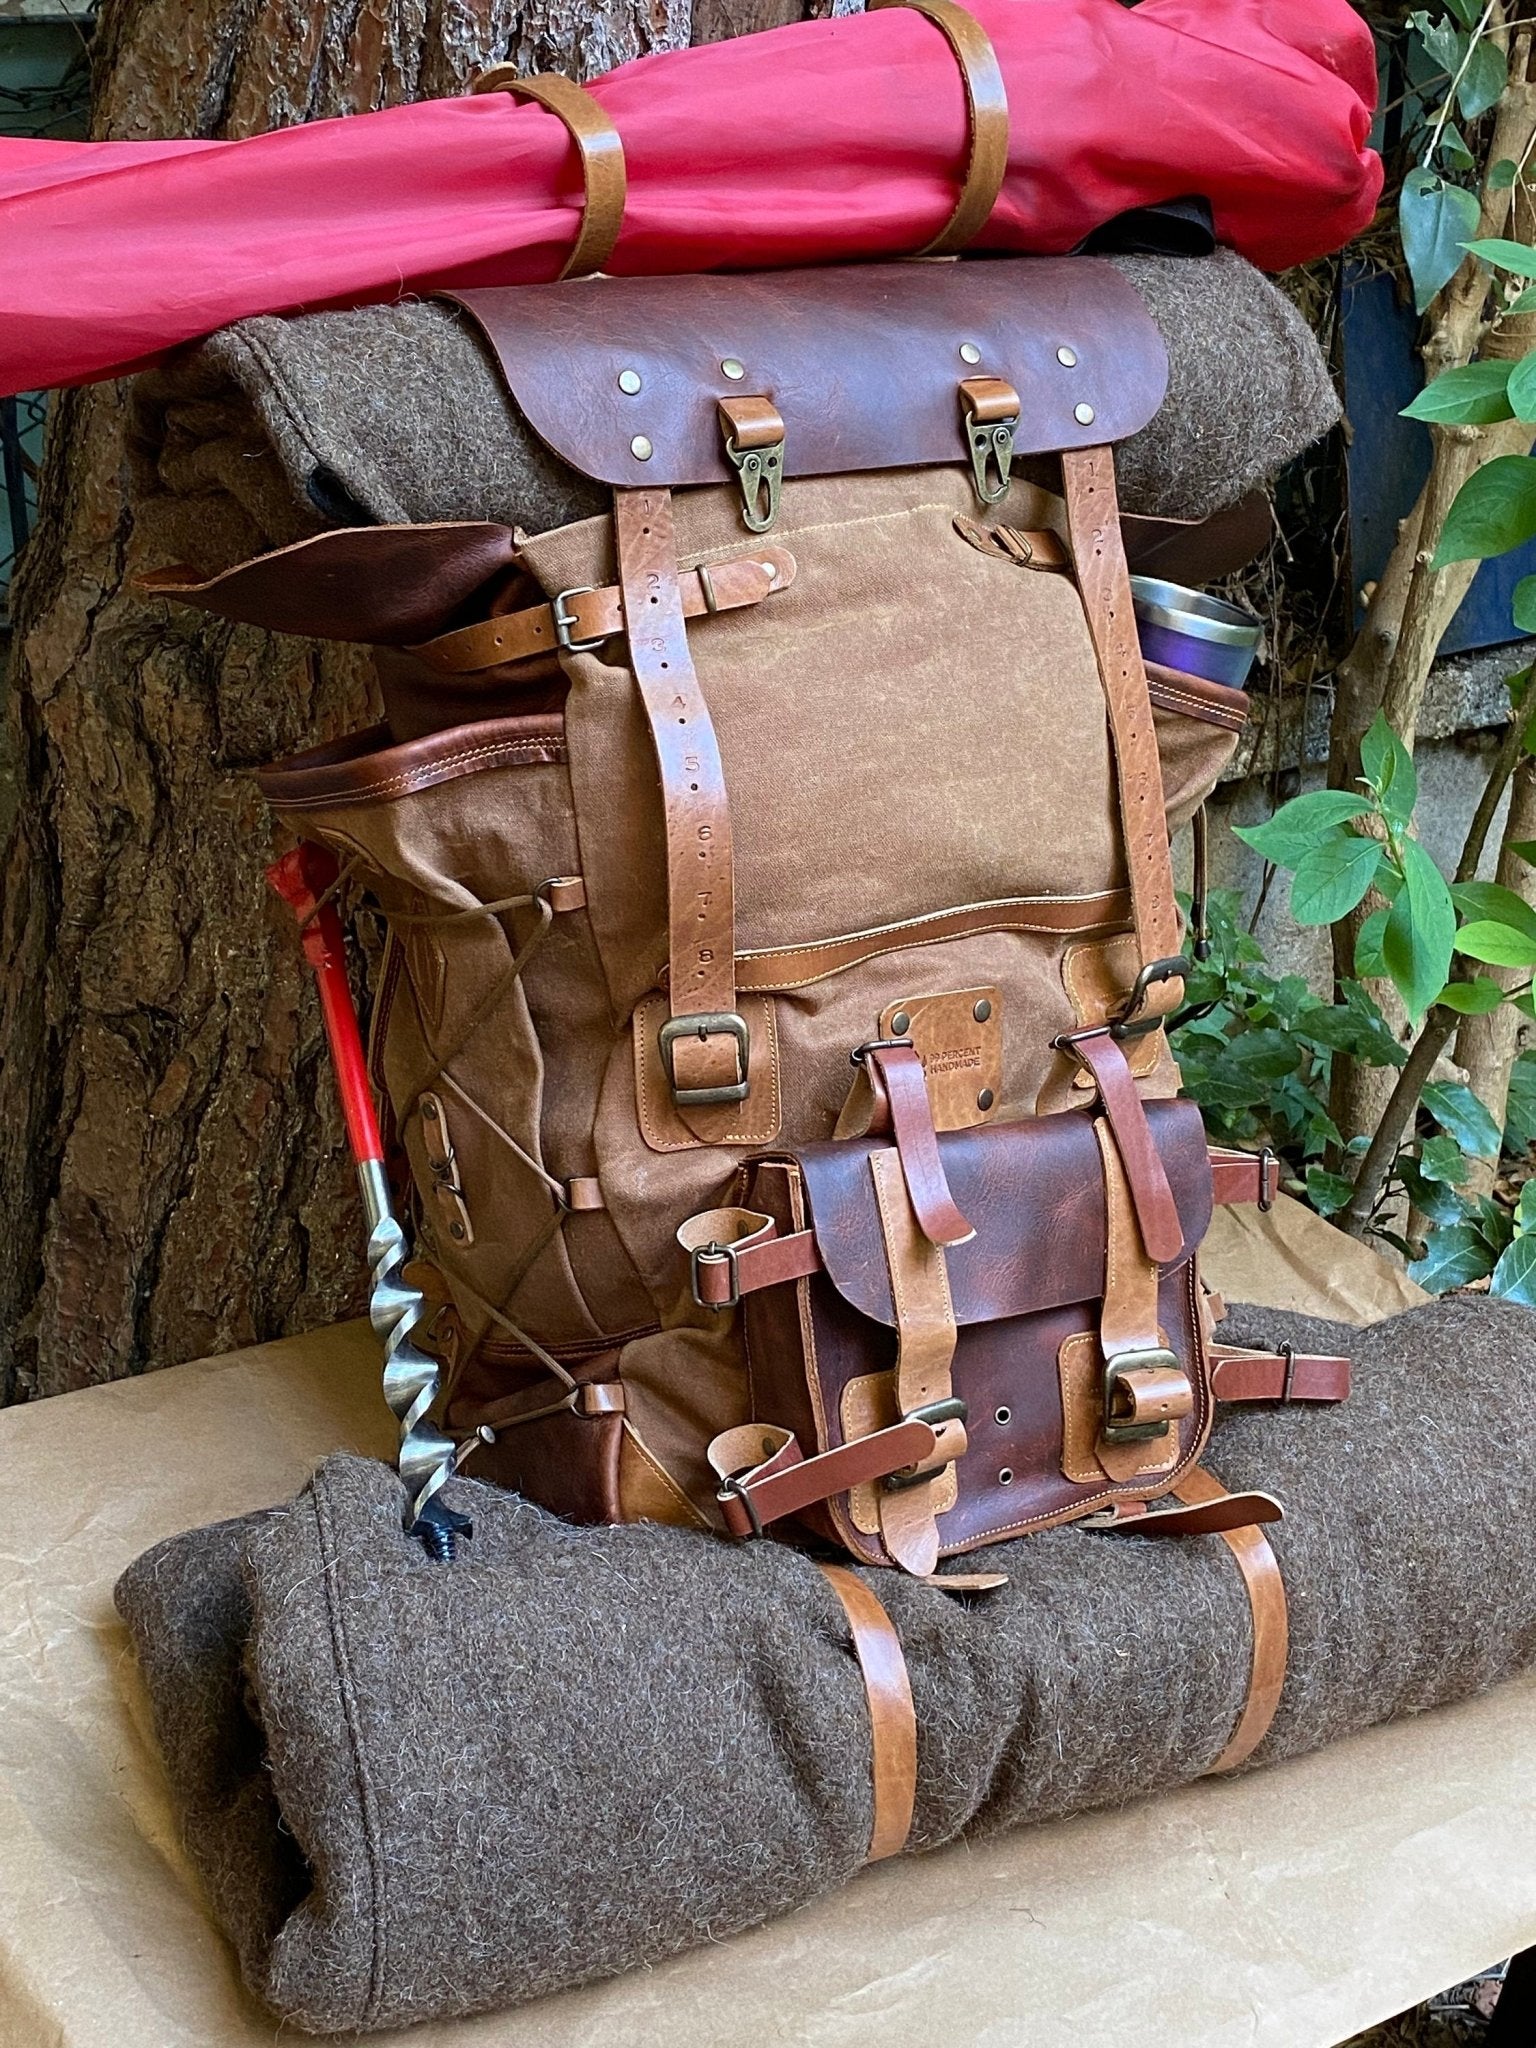 Vintage Leather Backpack | Bag | Waxed Canvas Backpack | Handmade Daypack -  Travel - Camping- Hiking- Bushcraft | Rucksack | Personalization